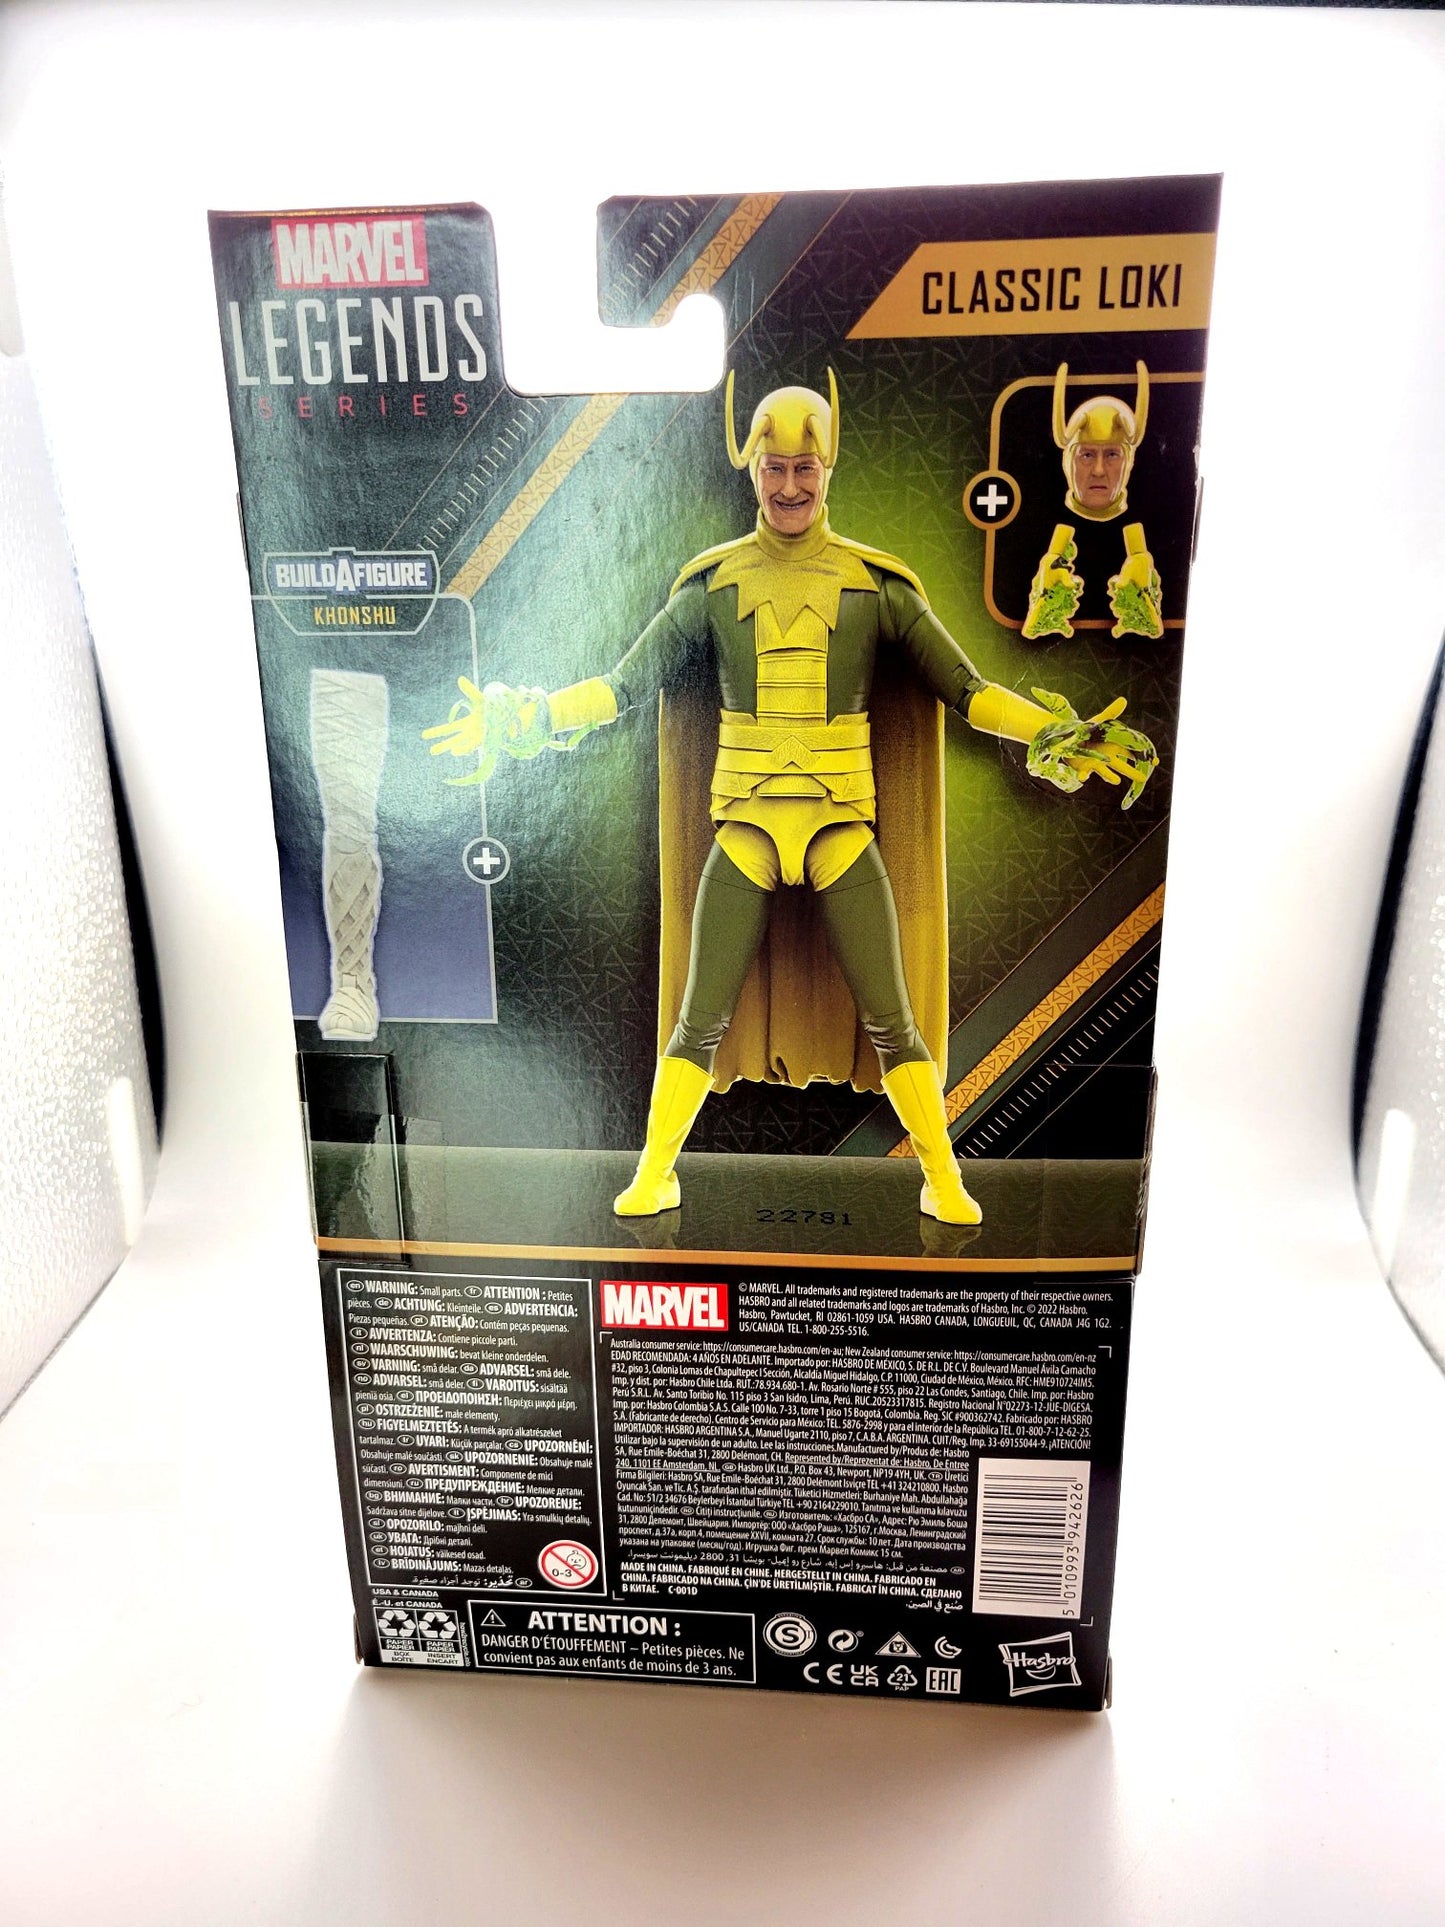 Hasbro Marvel Legends Disney+ Loki Classic Loki Action Figure